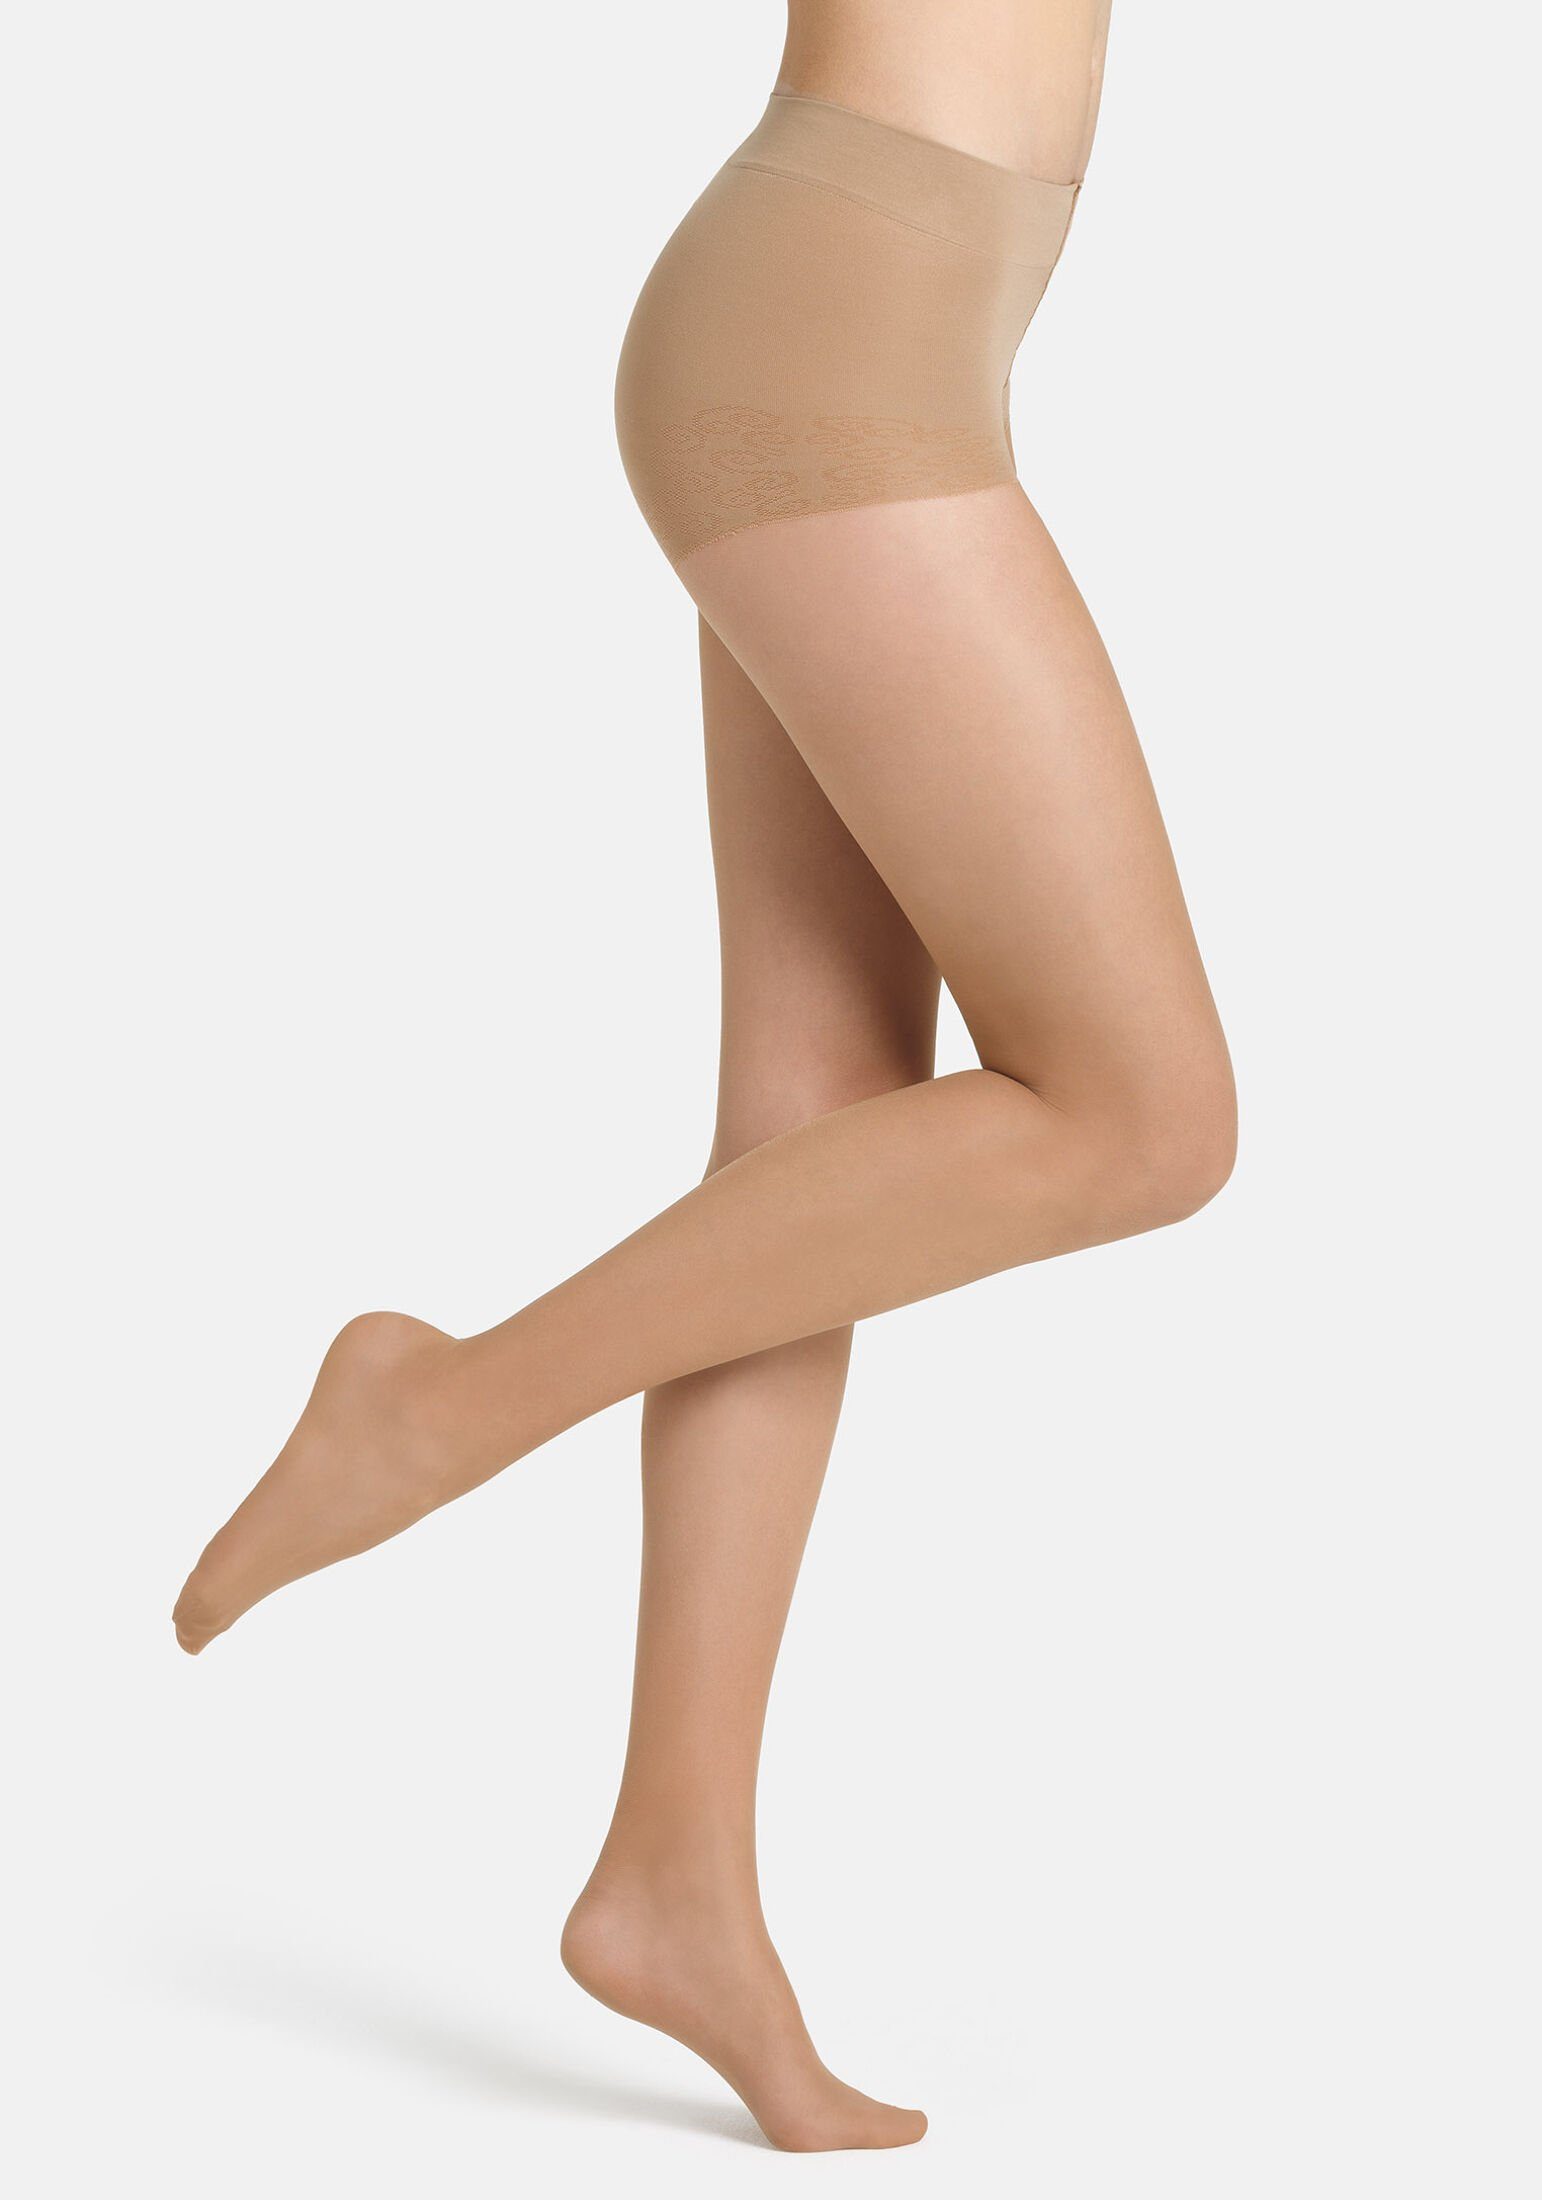 Camano Feinstrumpfhose Strumpfhose 3er Pack, Control Forming Panty mit  Spitzenansatz am Bein modelliert | Feinstrumpfhosen